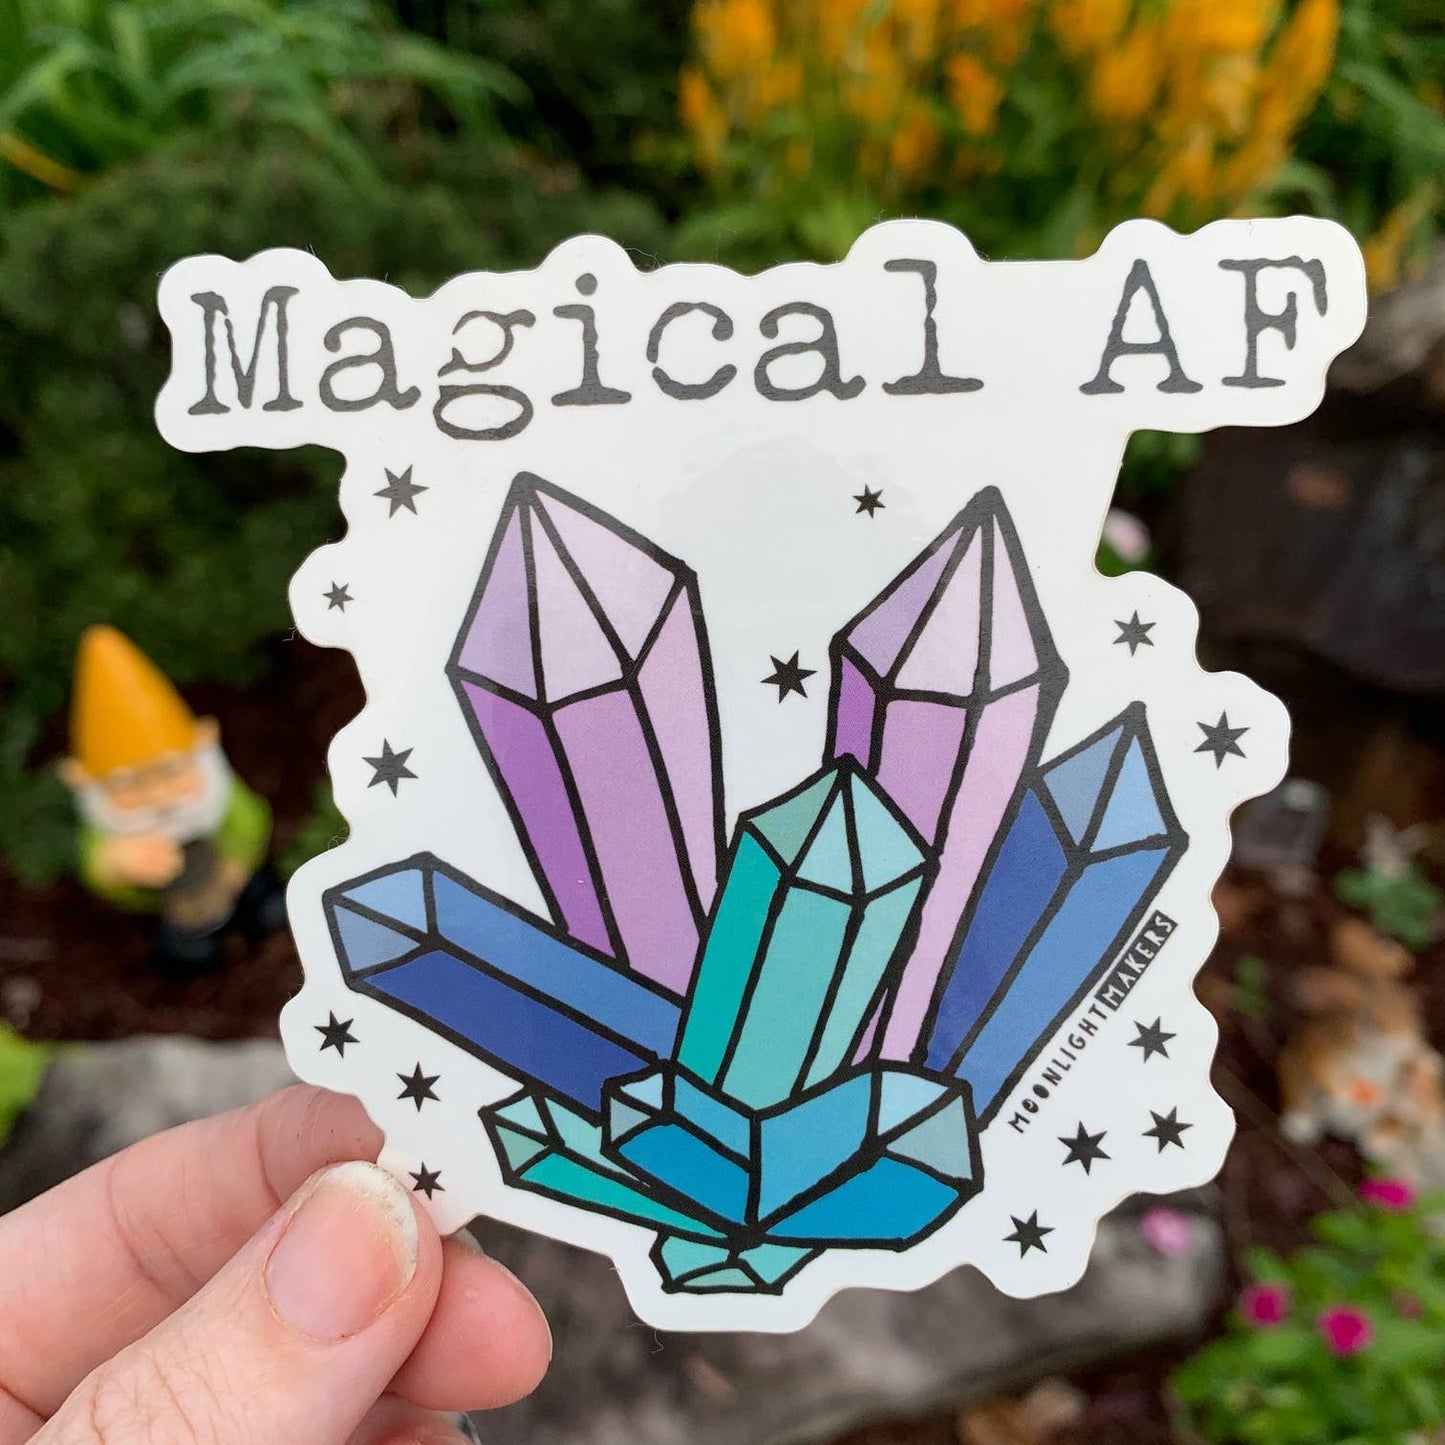 Magical AF - Die Cut Sticker